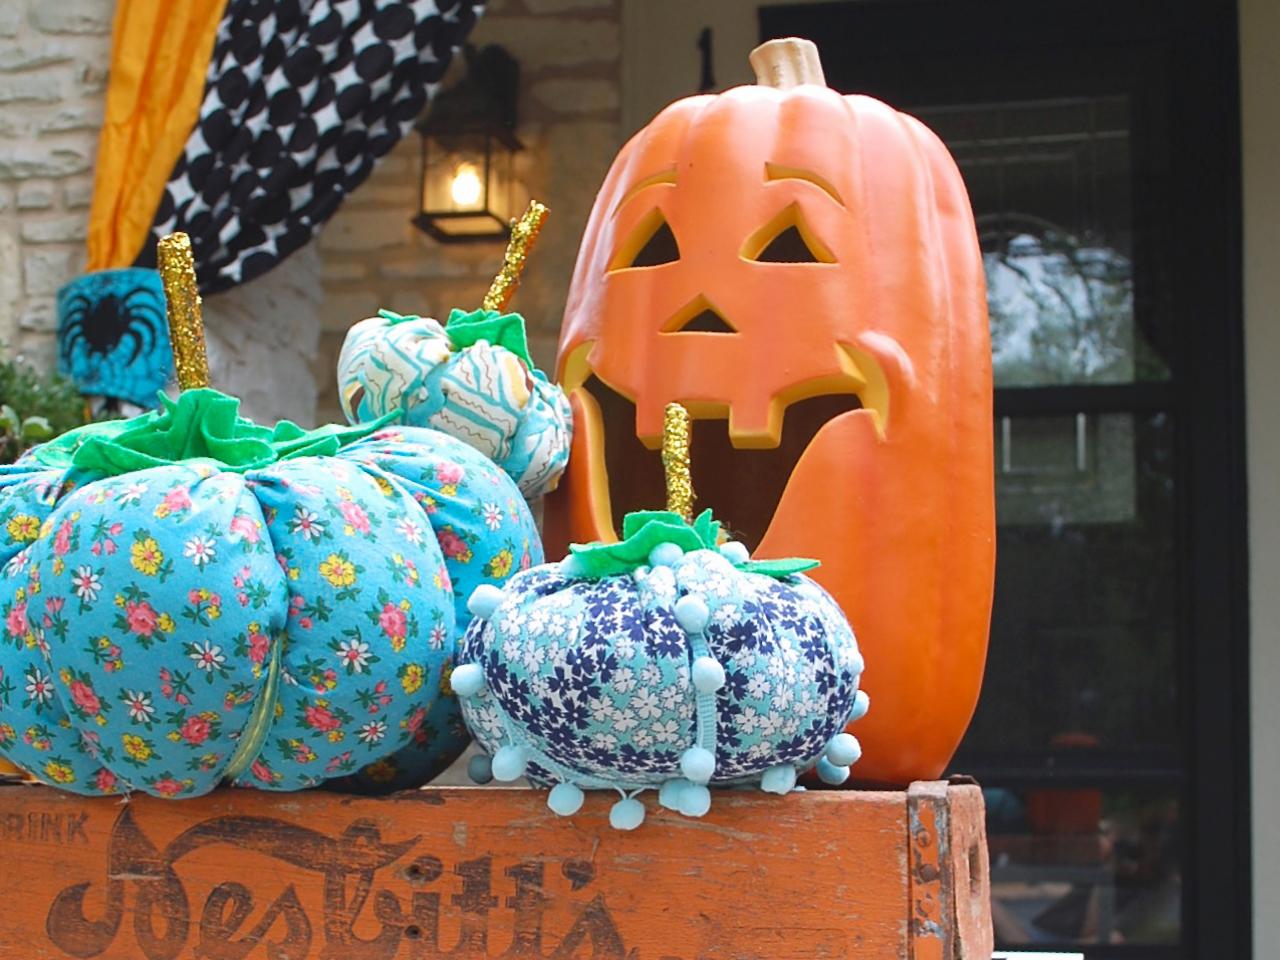 10 Ways to Decorate a Teal Pumpkin | DIY Home Decor and Decorating ...